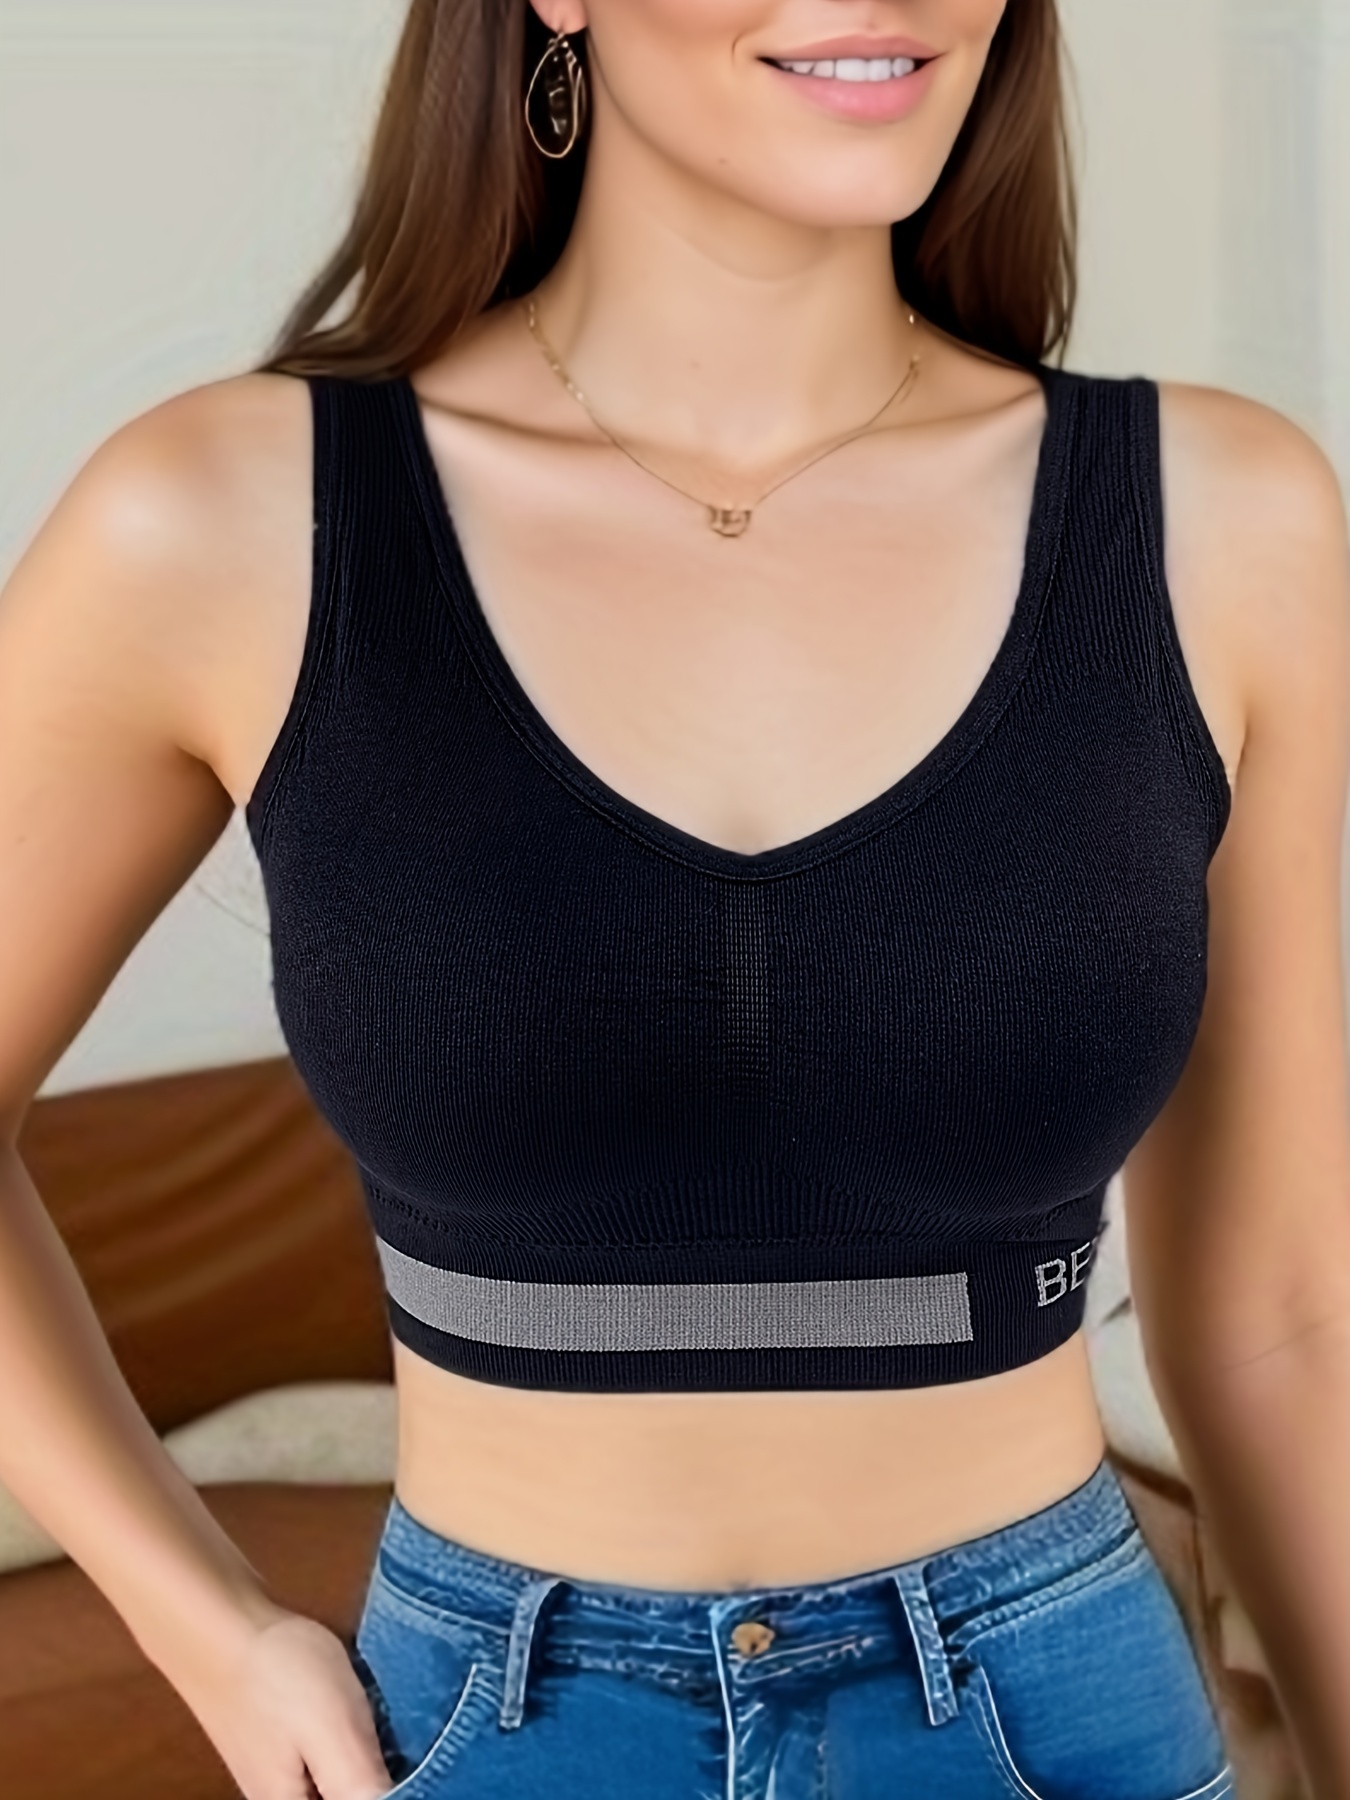 Womens 2PK Tummy Control Shapewear Tank Tops Seamless Square Neck  Compression Tops Slimming Body Shaper Camisole-Black S